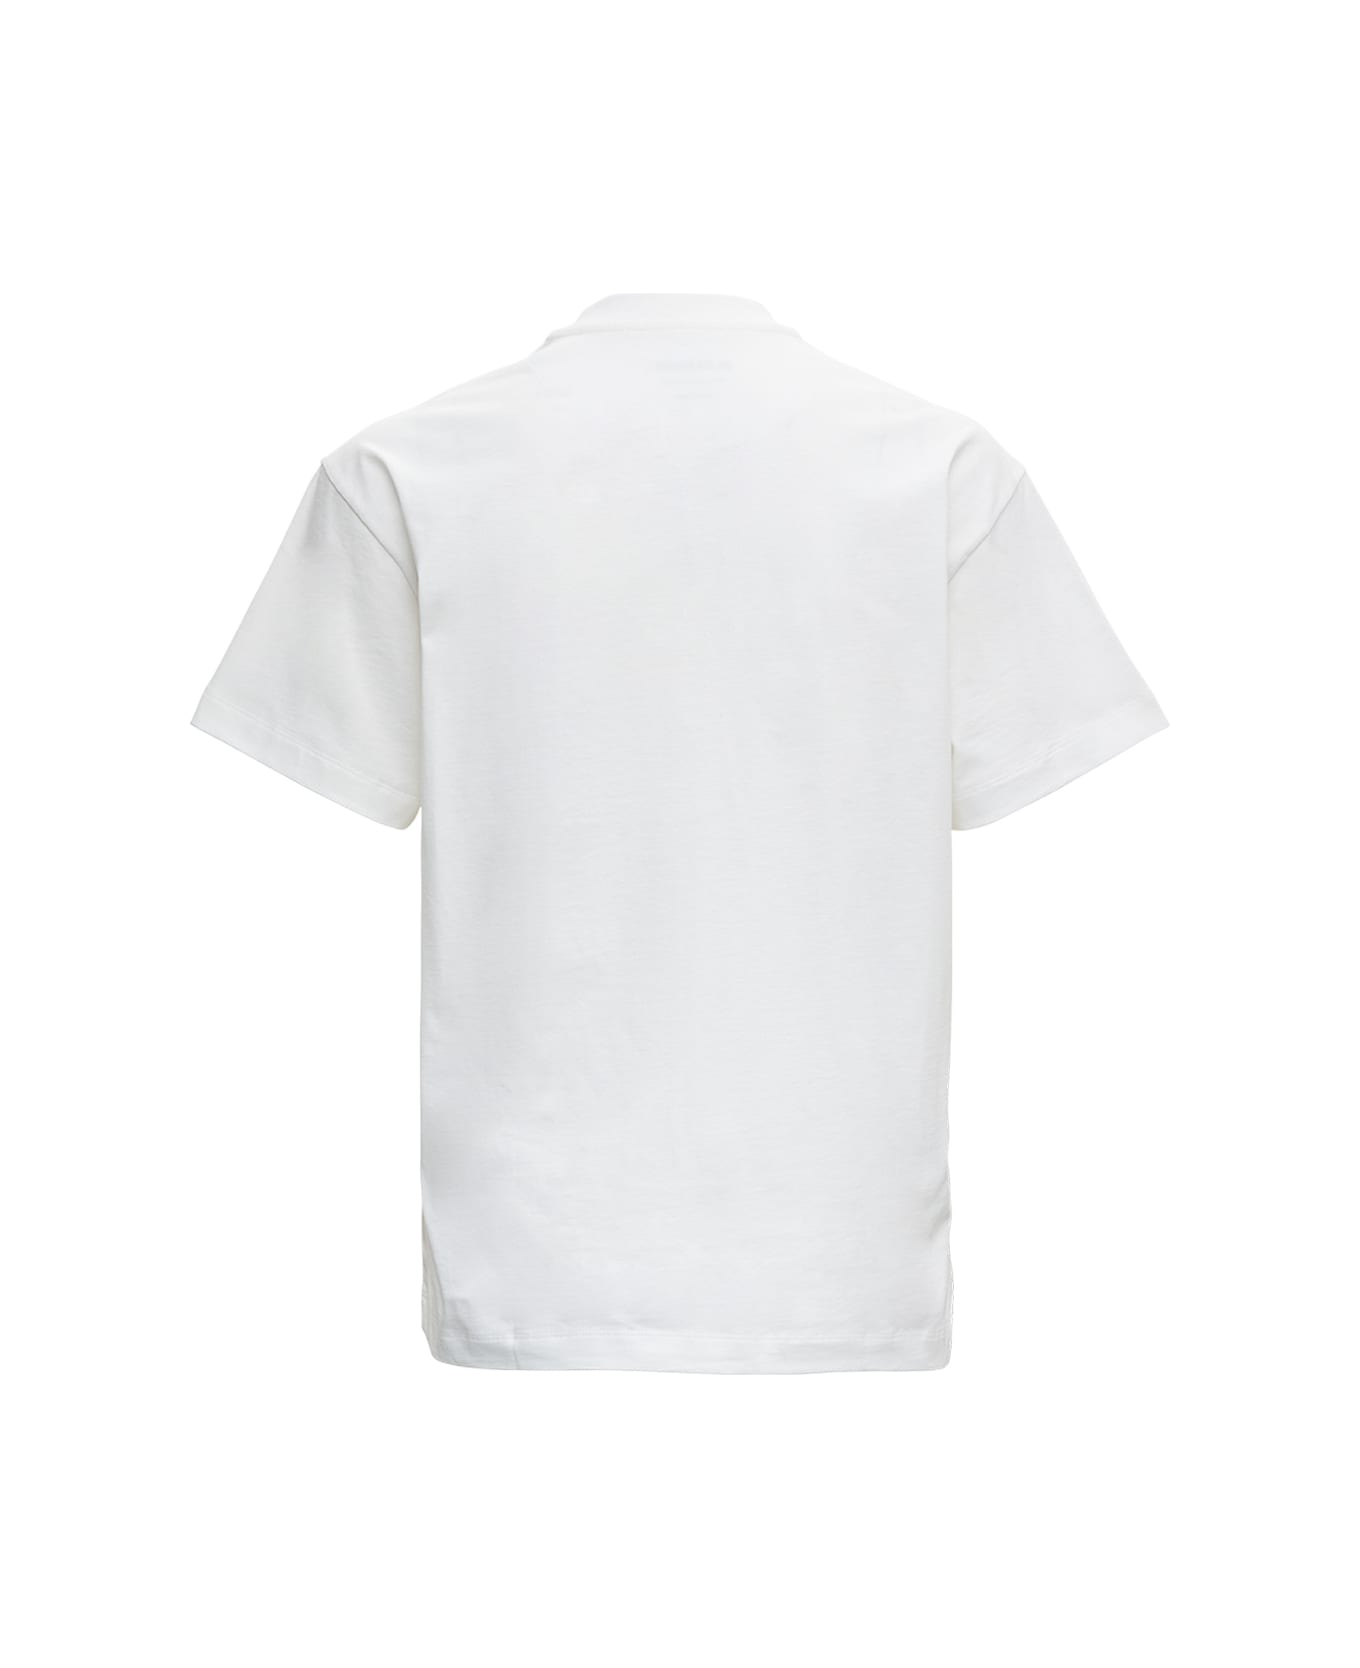 Jil Sander Set Of Three White Cotton T-shirts With Logo - White